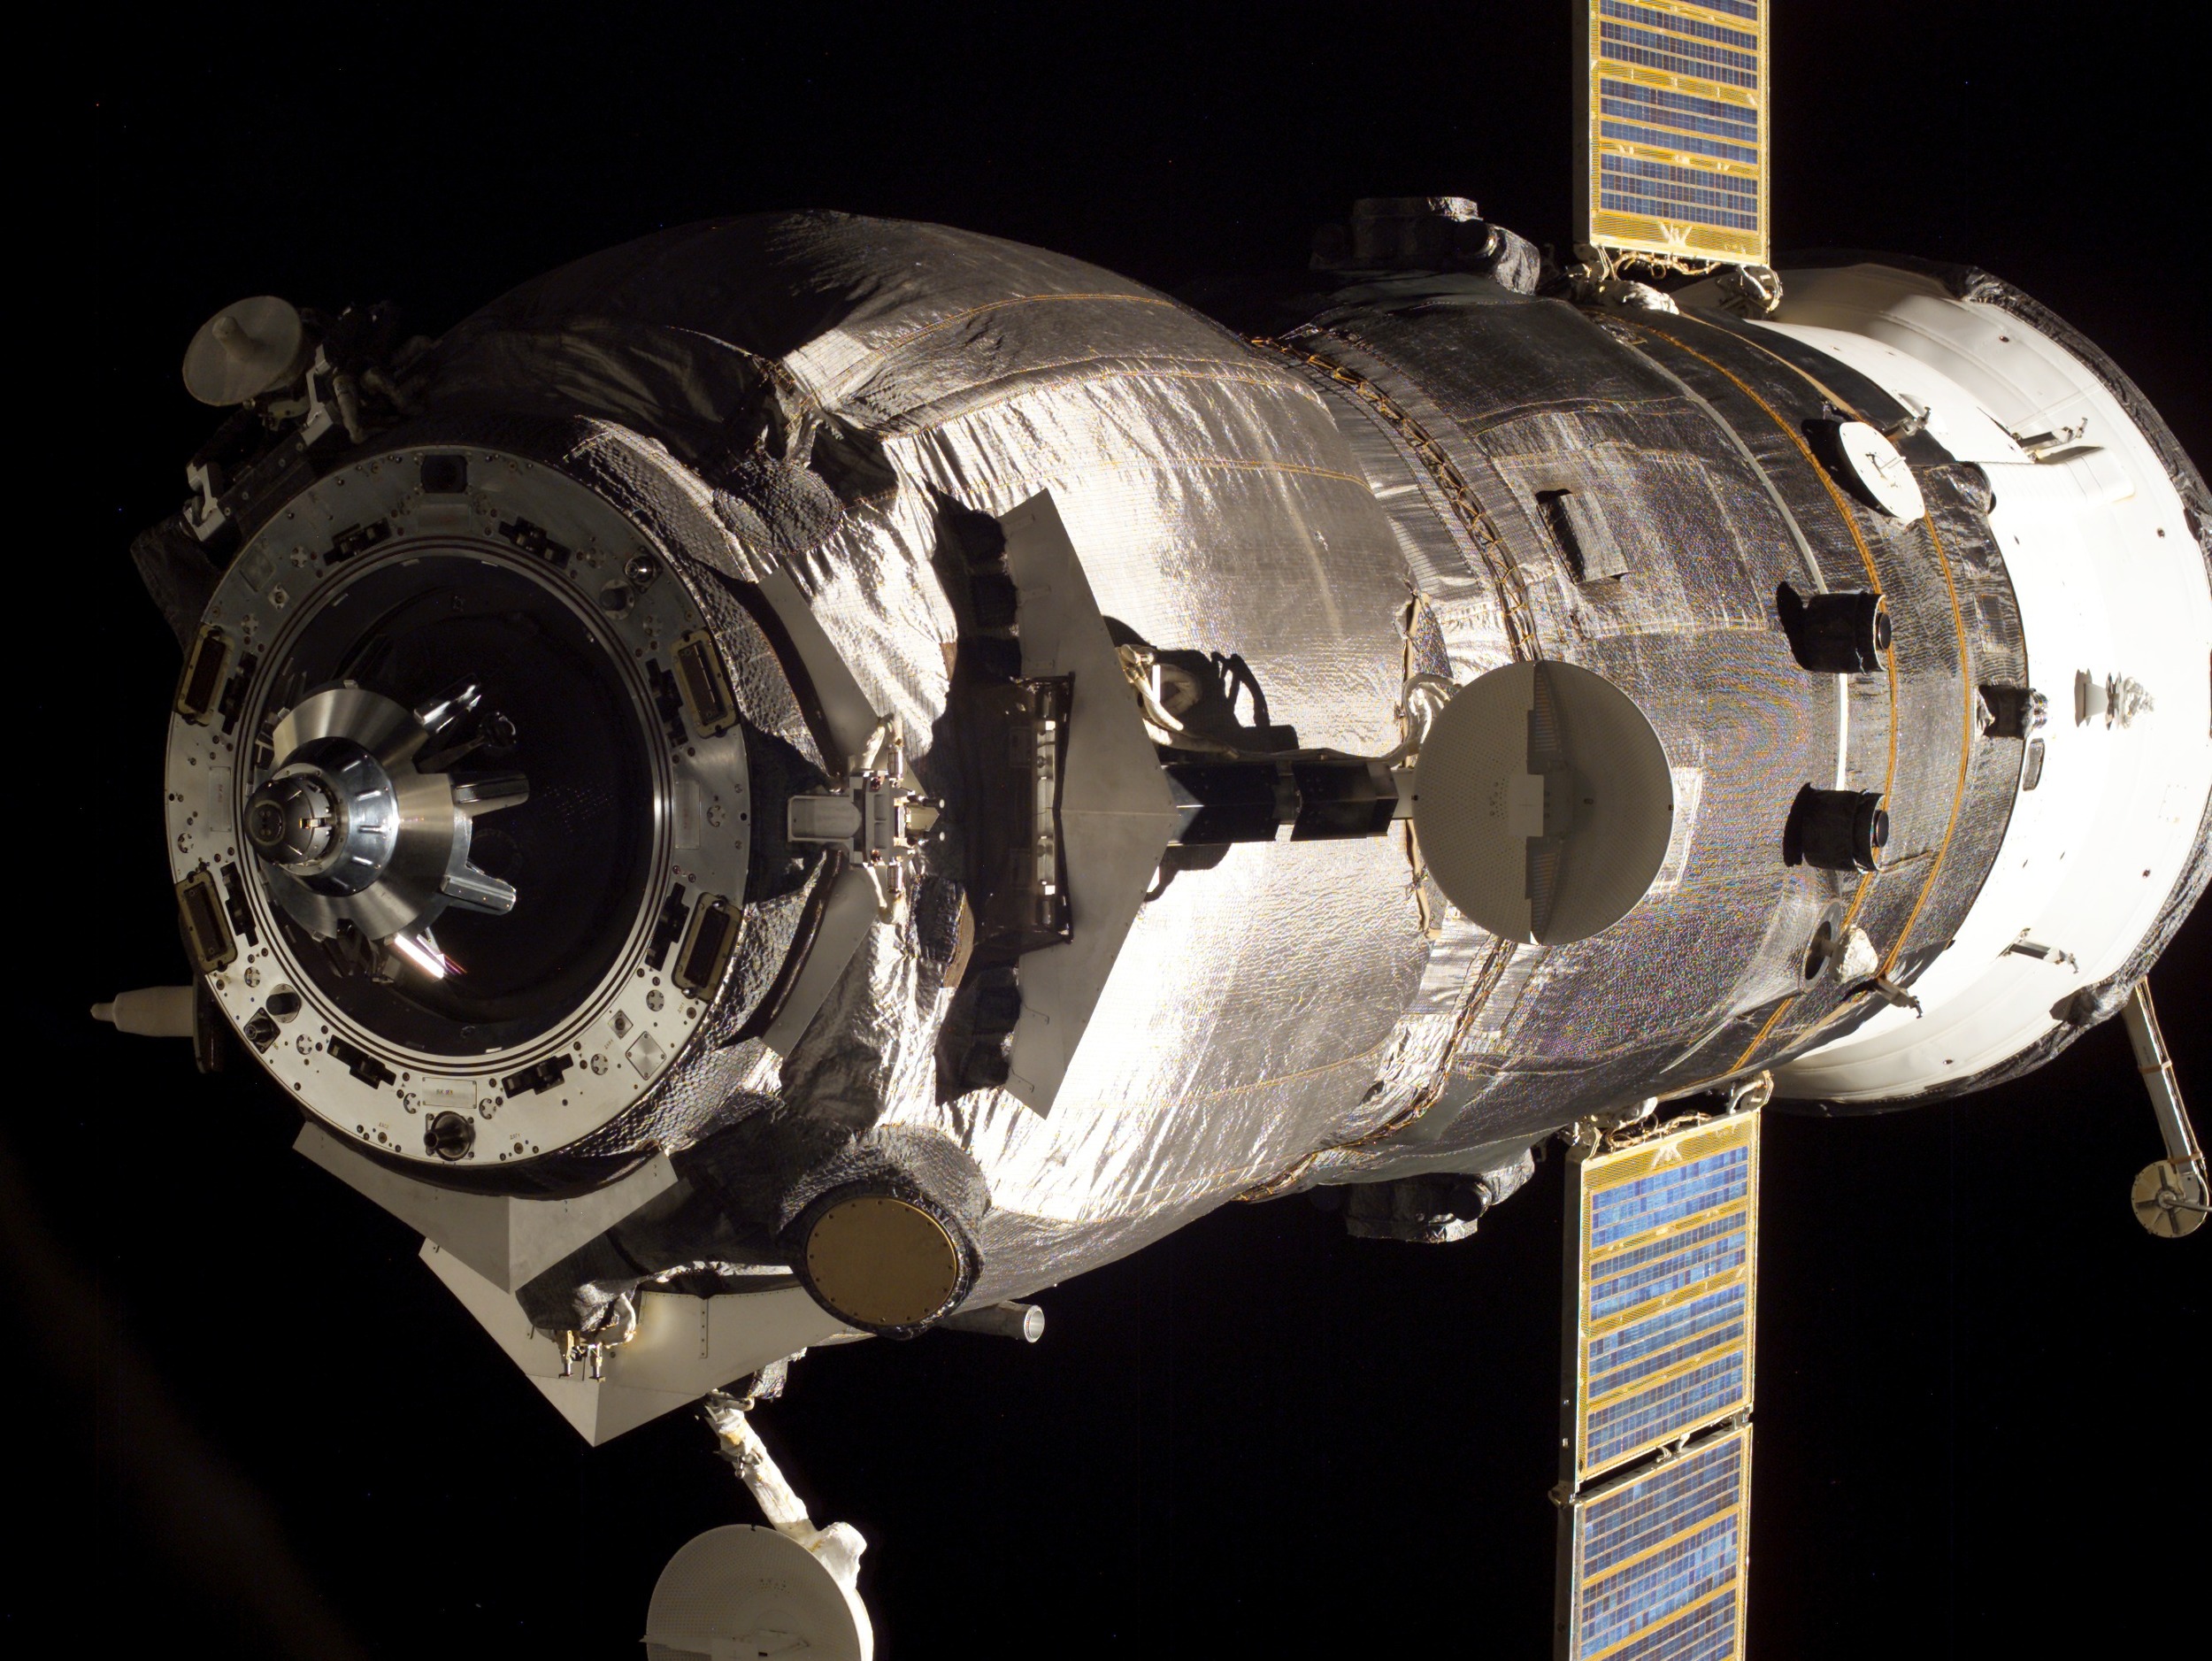  A Progress meters away from docking. Photo Credit: NASA 